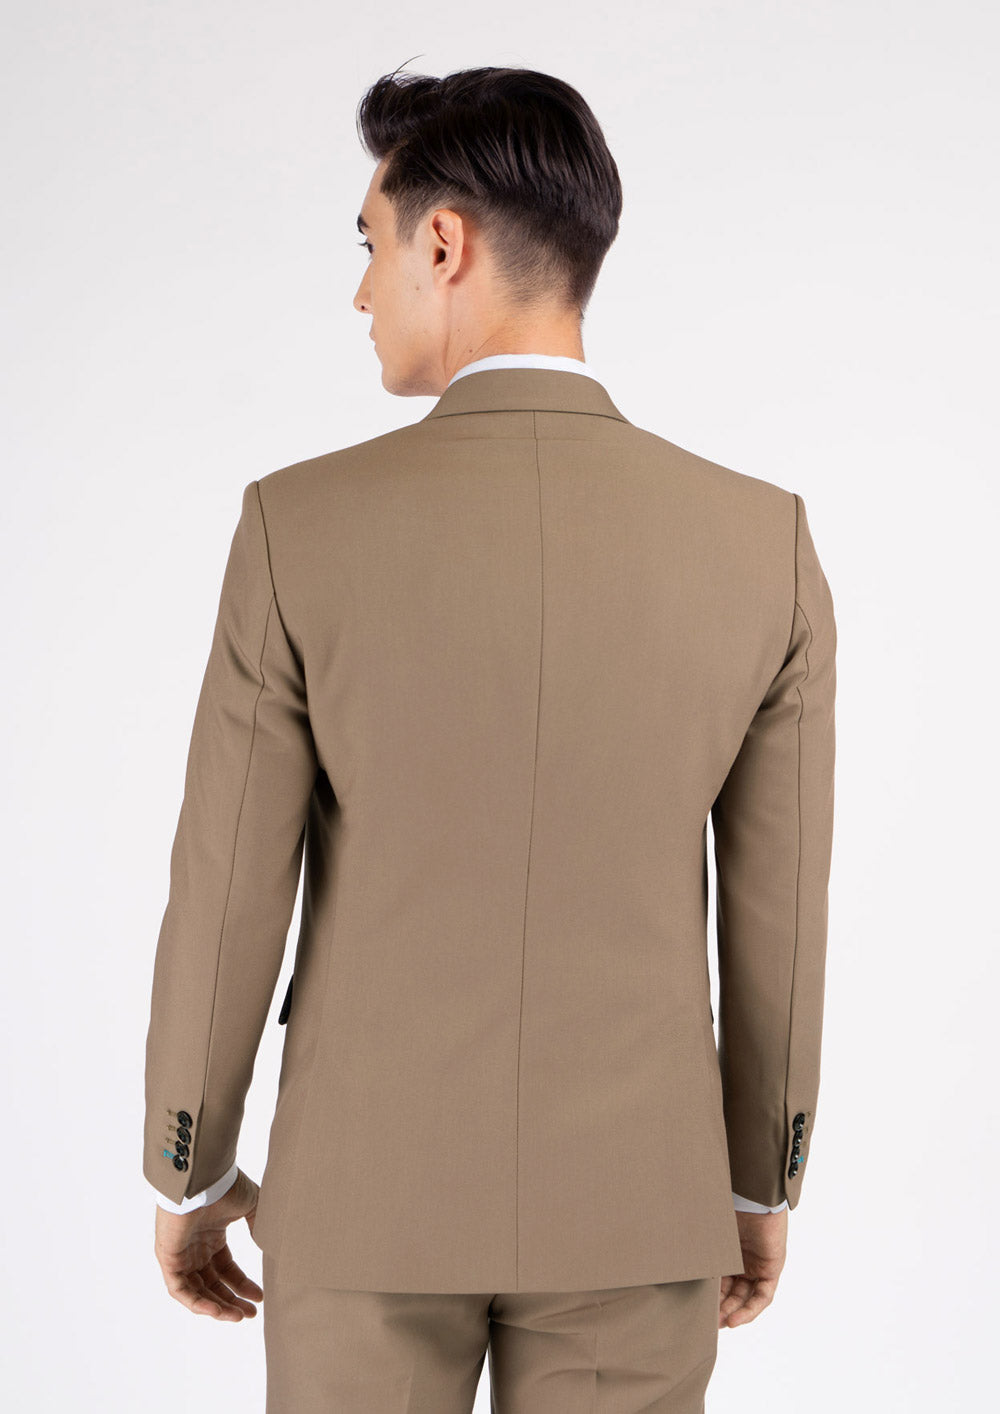 Astor Light Brown Stretch Suit